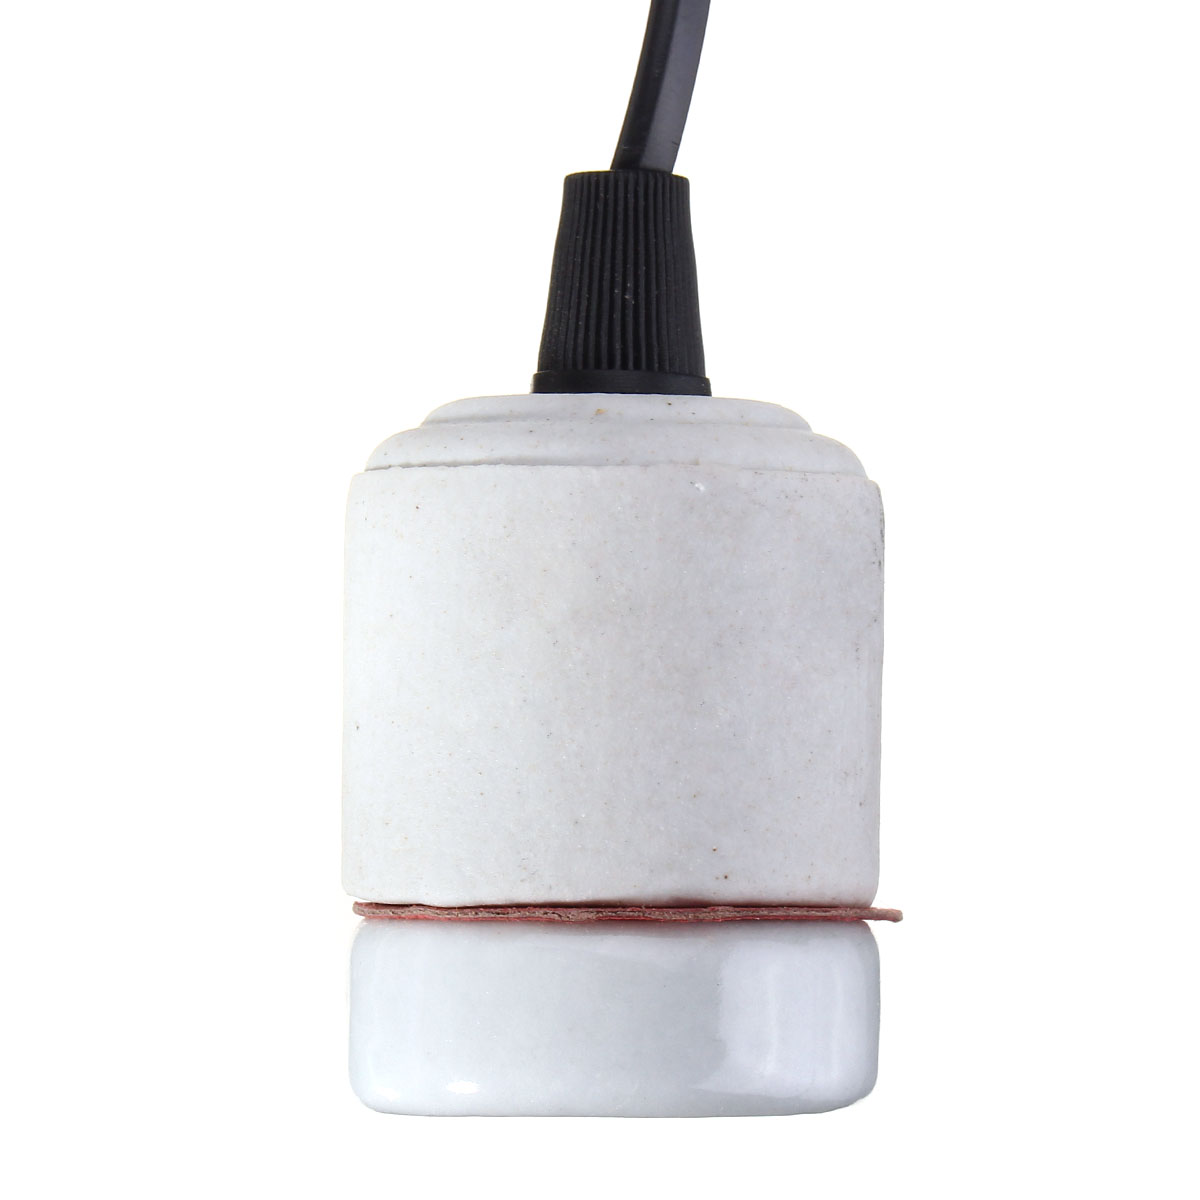 E27-Reptile-Ceramic-Heat-Lamp-Holder-Light-Switch-Socket-Adapter-Lamp-Fitting-1152772-4